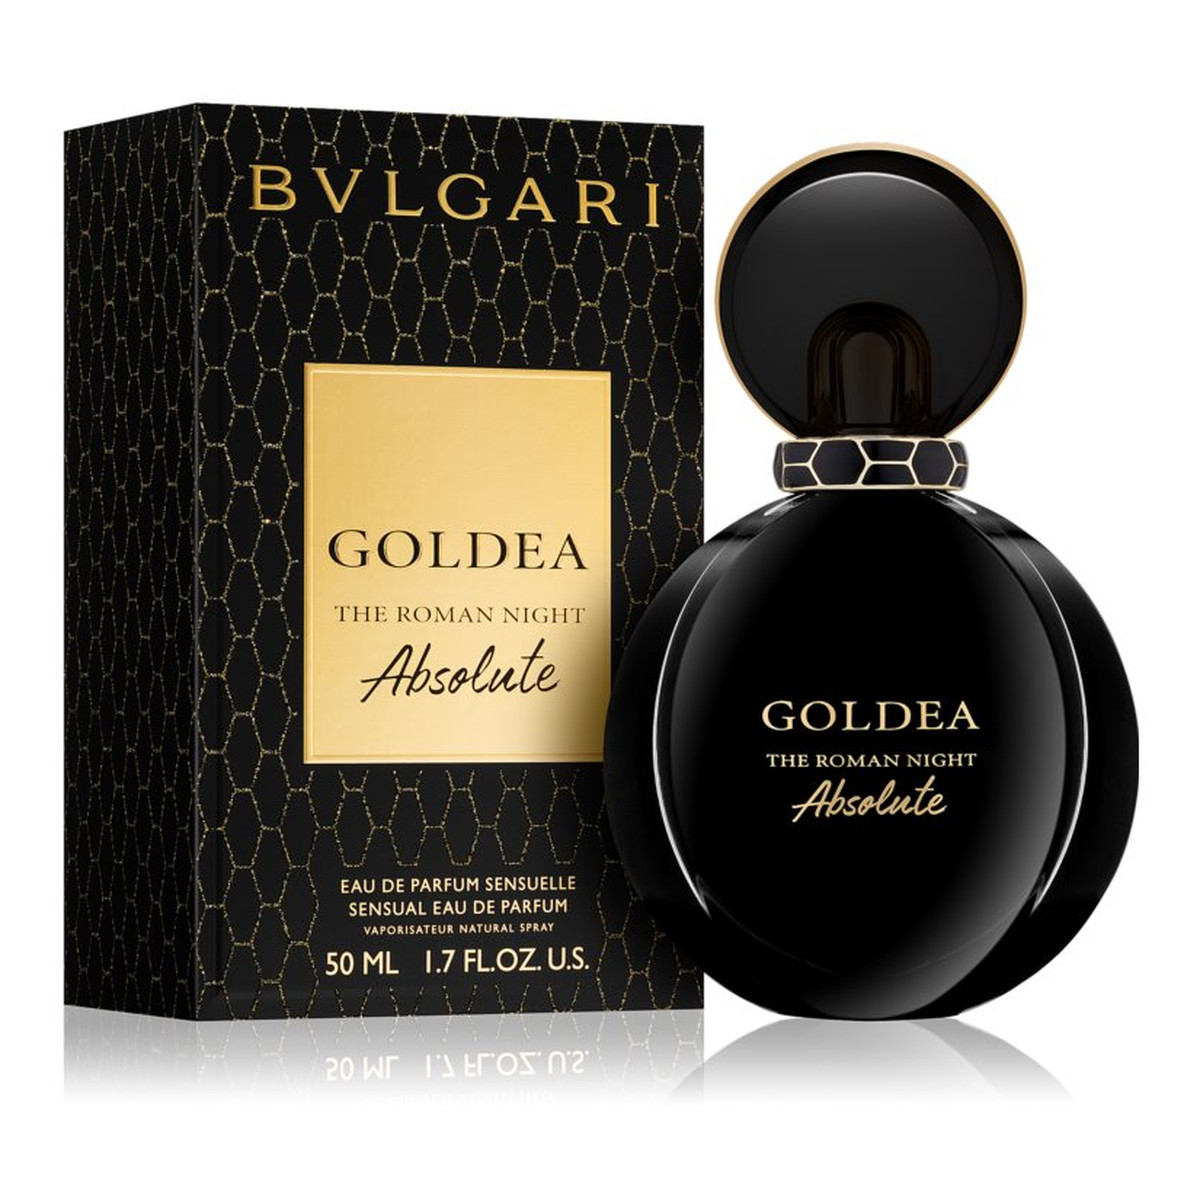 Bvlgari Goldea The Roman Night Absolute woda perfumowana 50ml